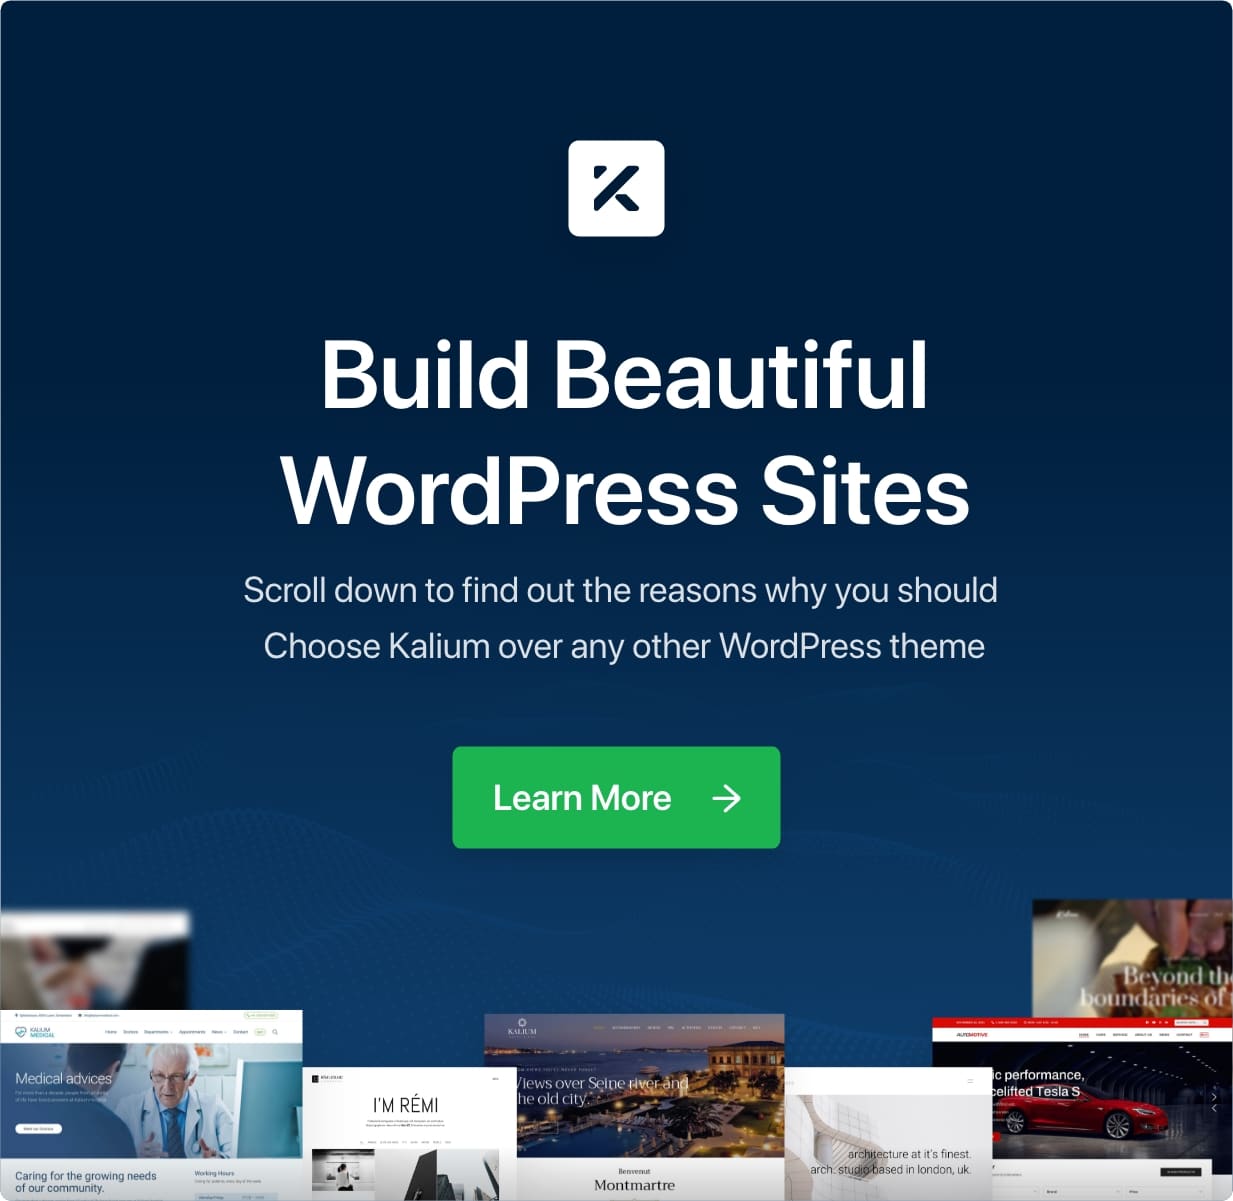 Build beautiful wordpress sites.